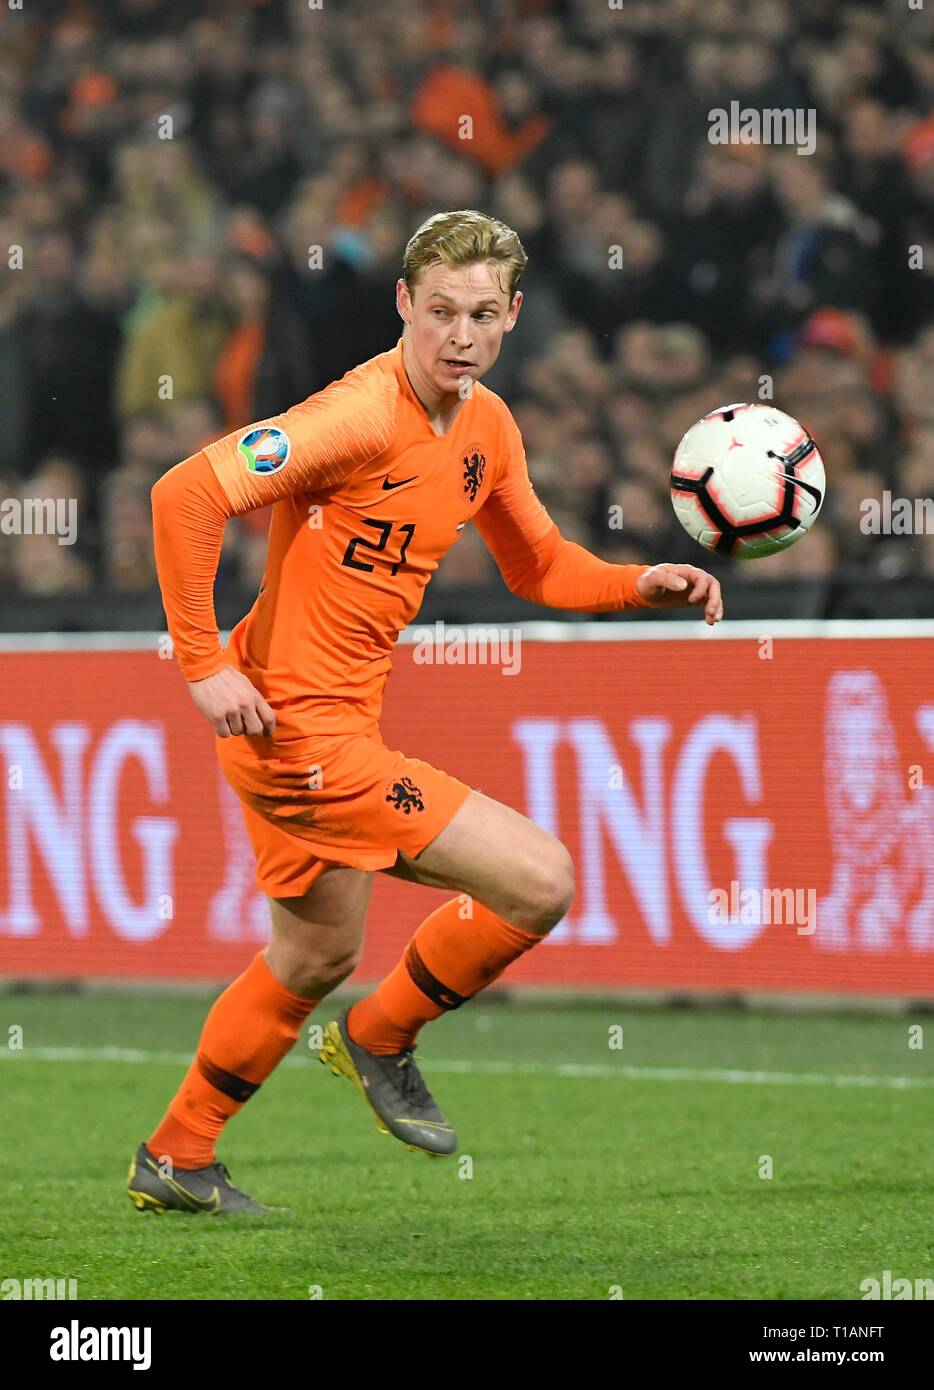 FT. The Netherlands 3-1 USA. 🇳🇱: Frenkie de Jong played the